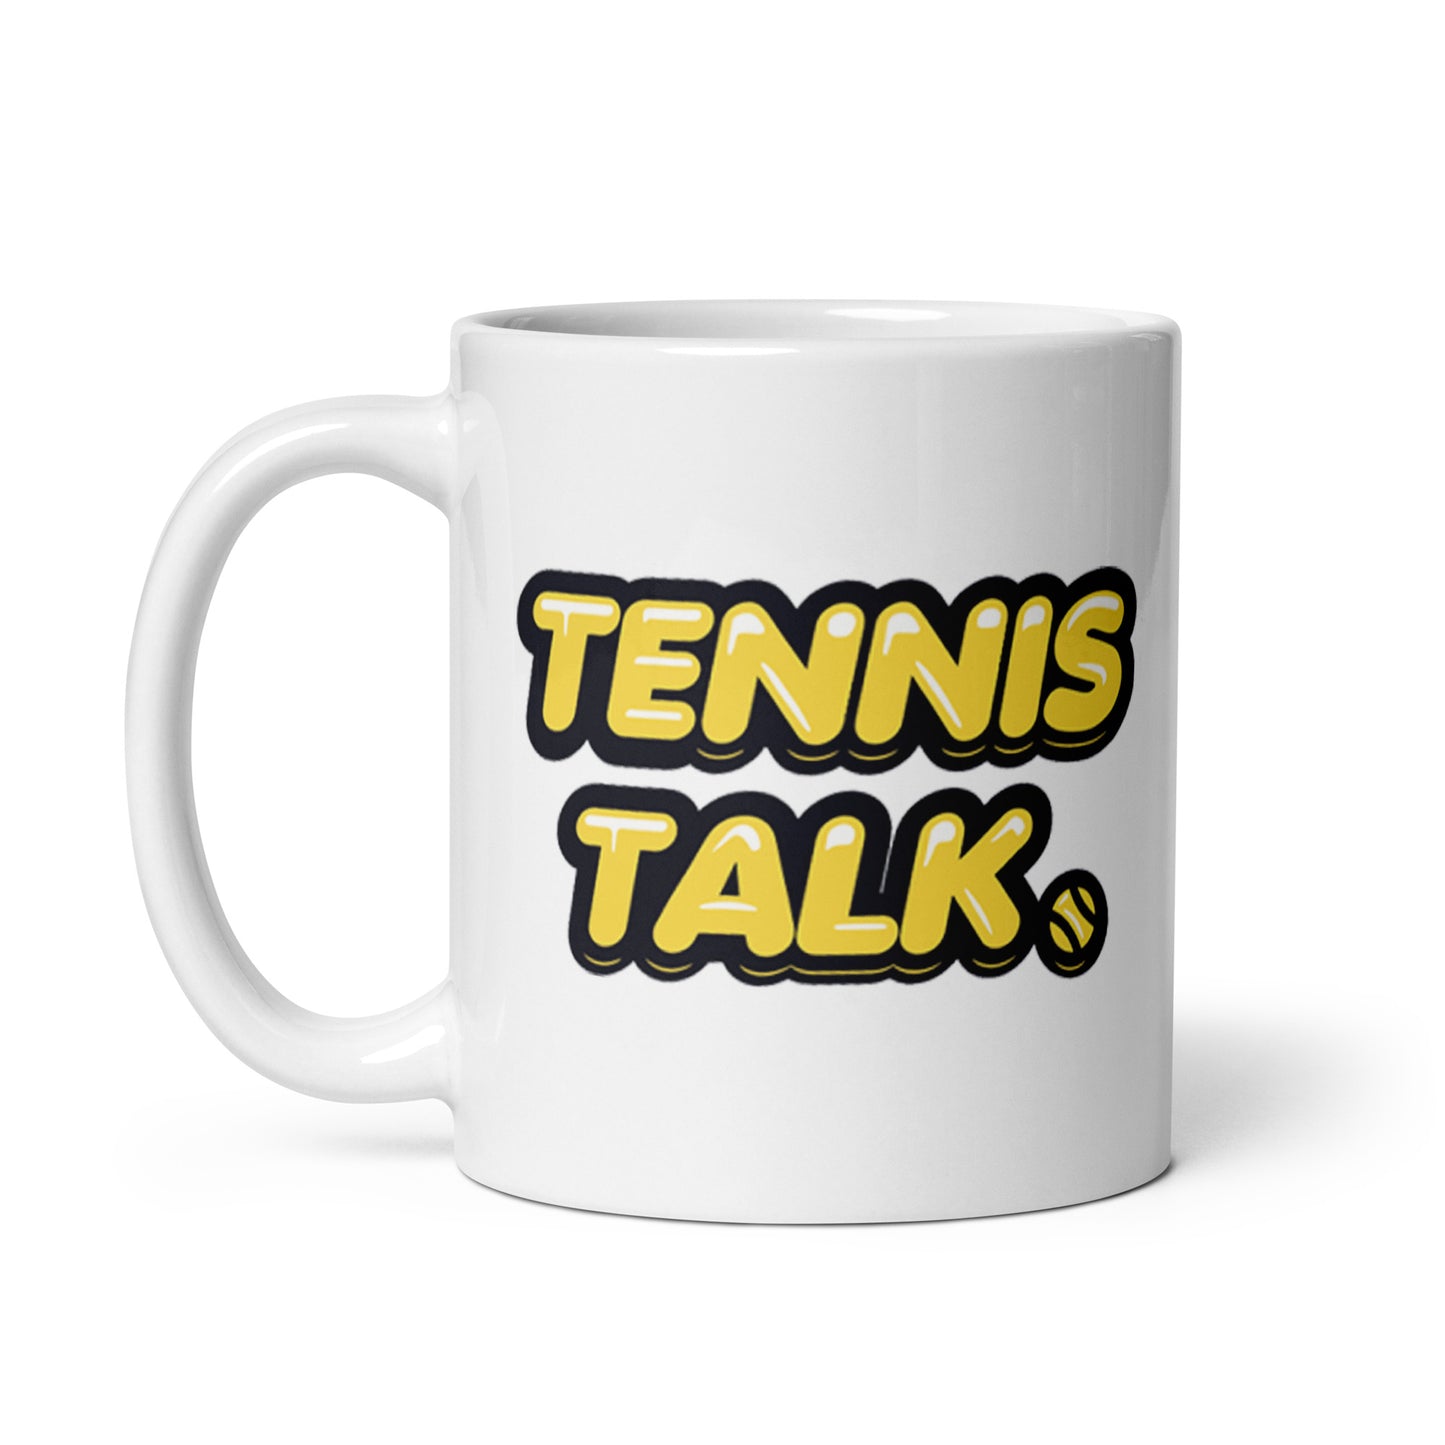 Tennis Talk Mug